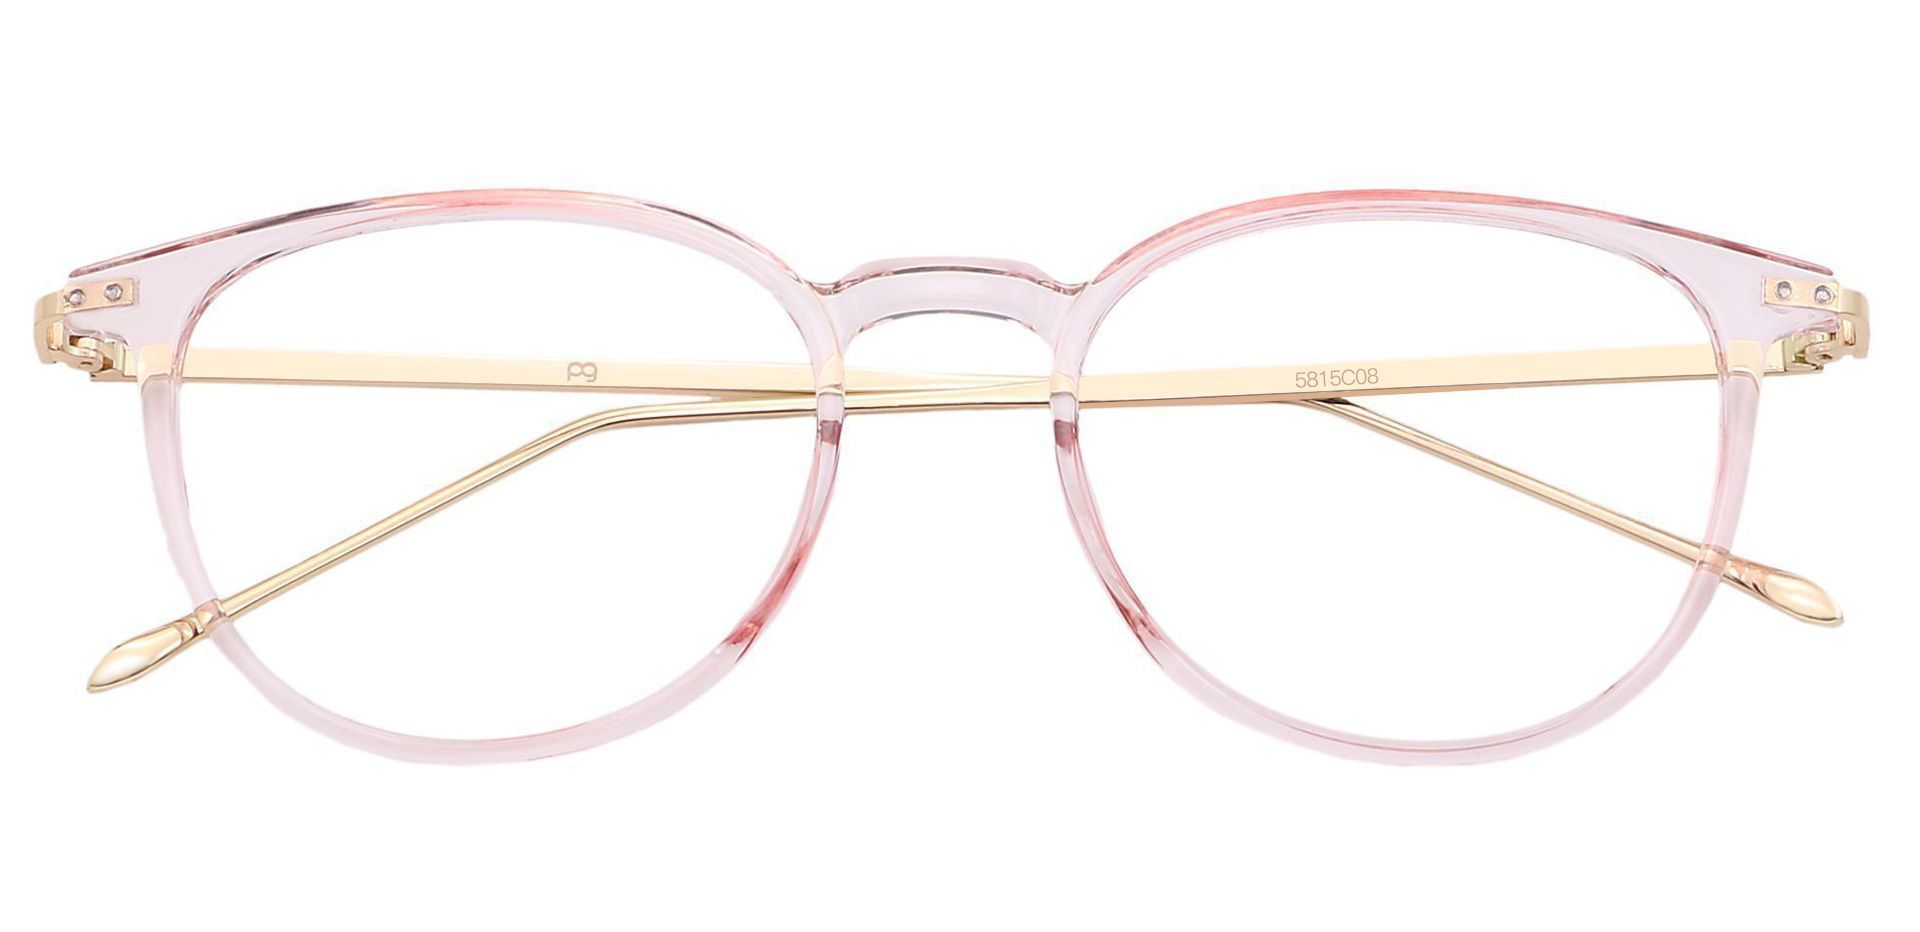 Elliott Round Non-Rx Glasses - Pink